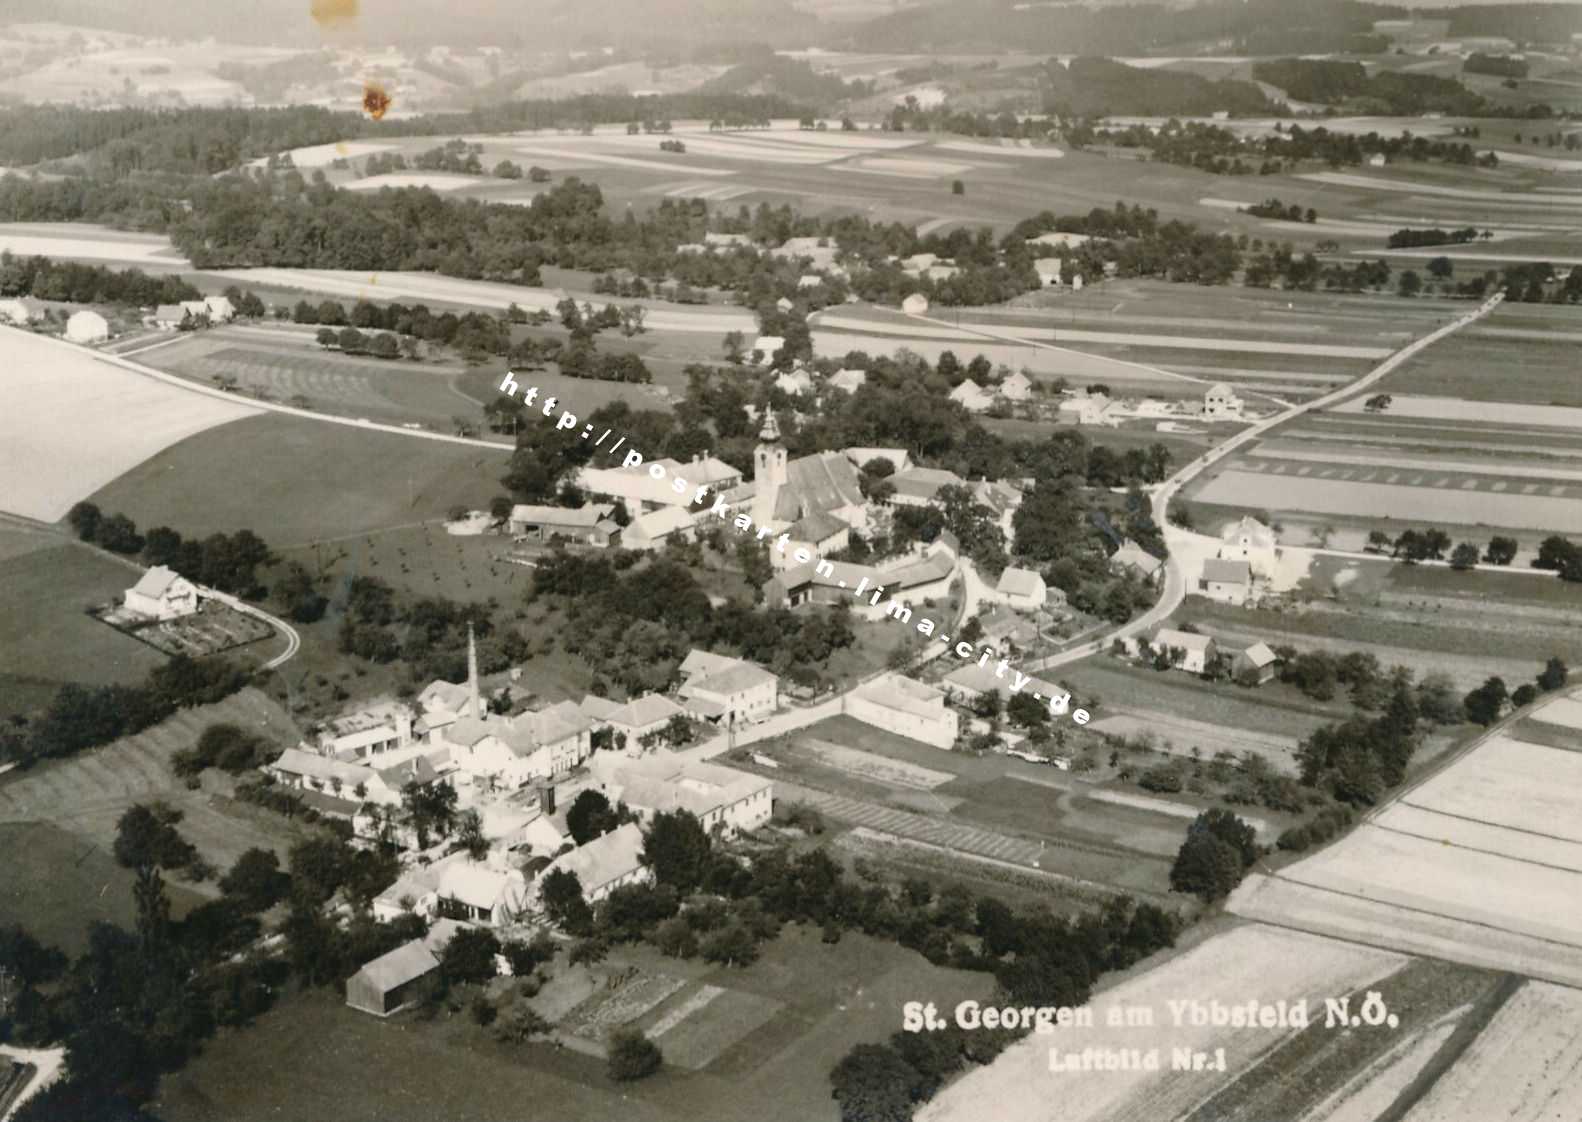 St. Georgen am Ybbsfelde Luftbild 1945